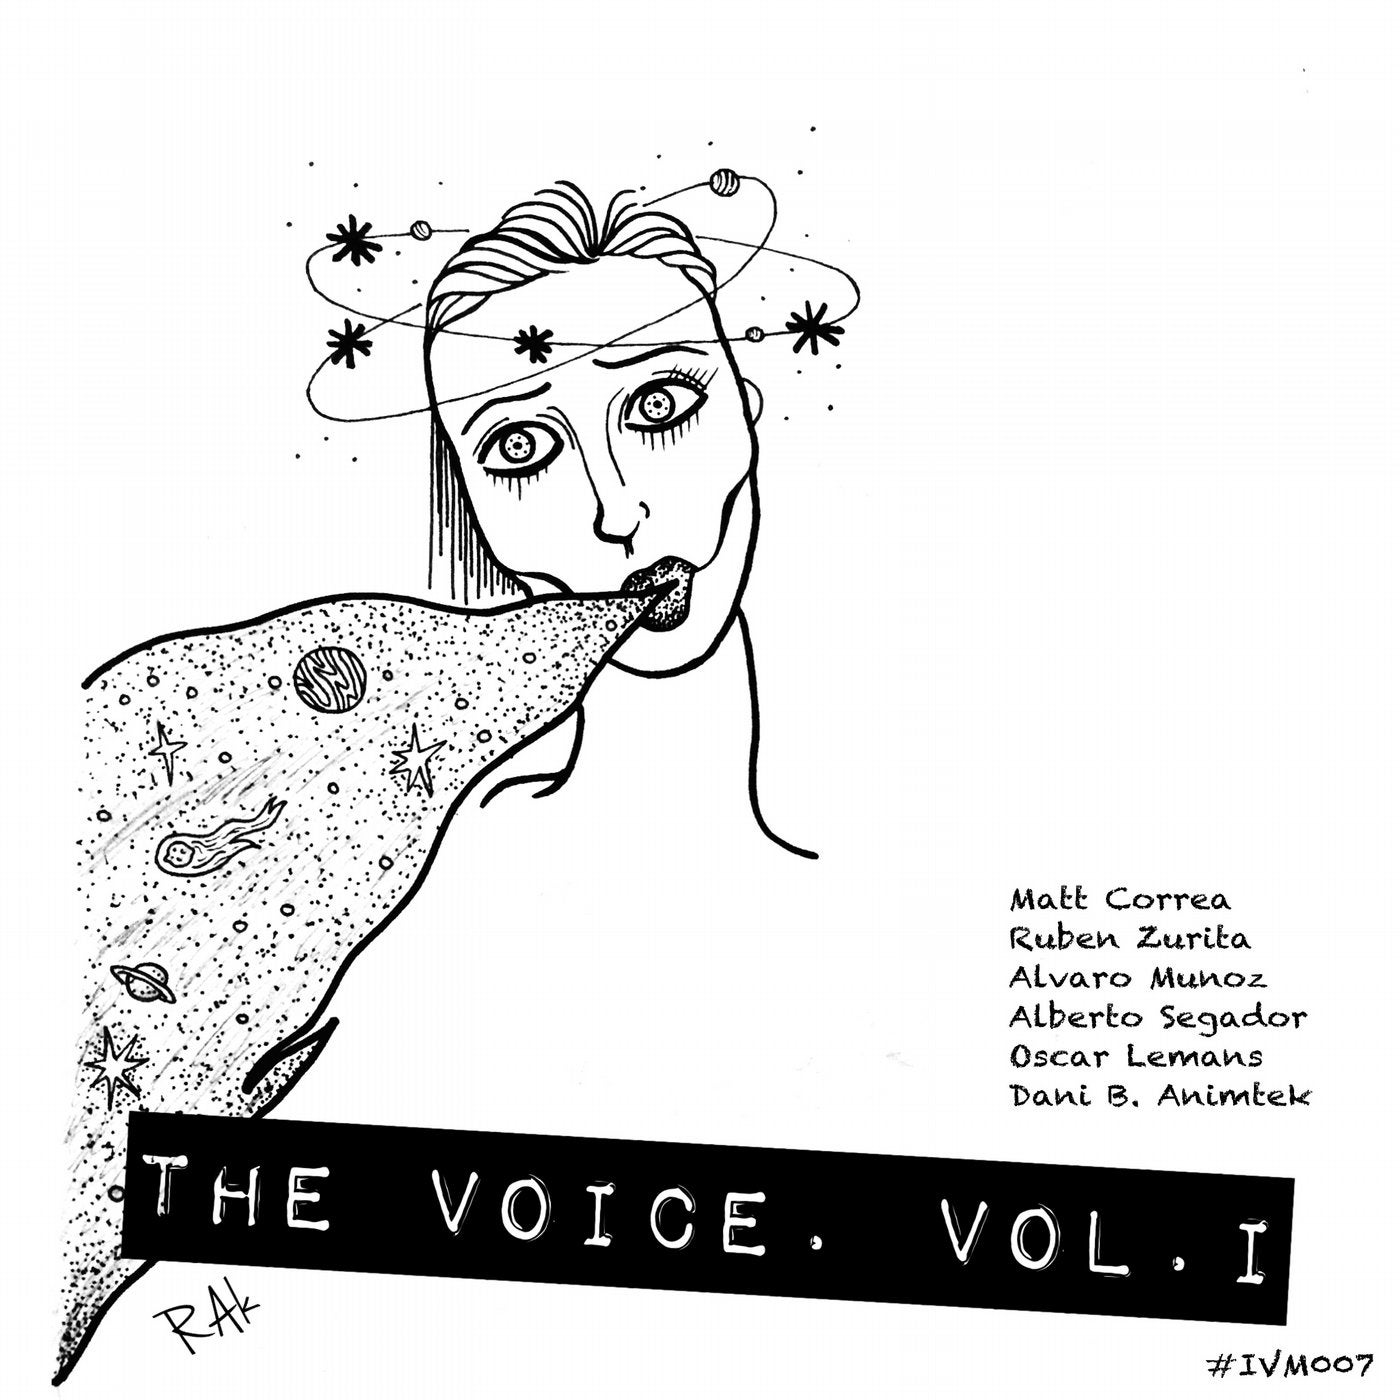 The Voice, Vol. 1